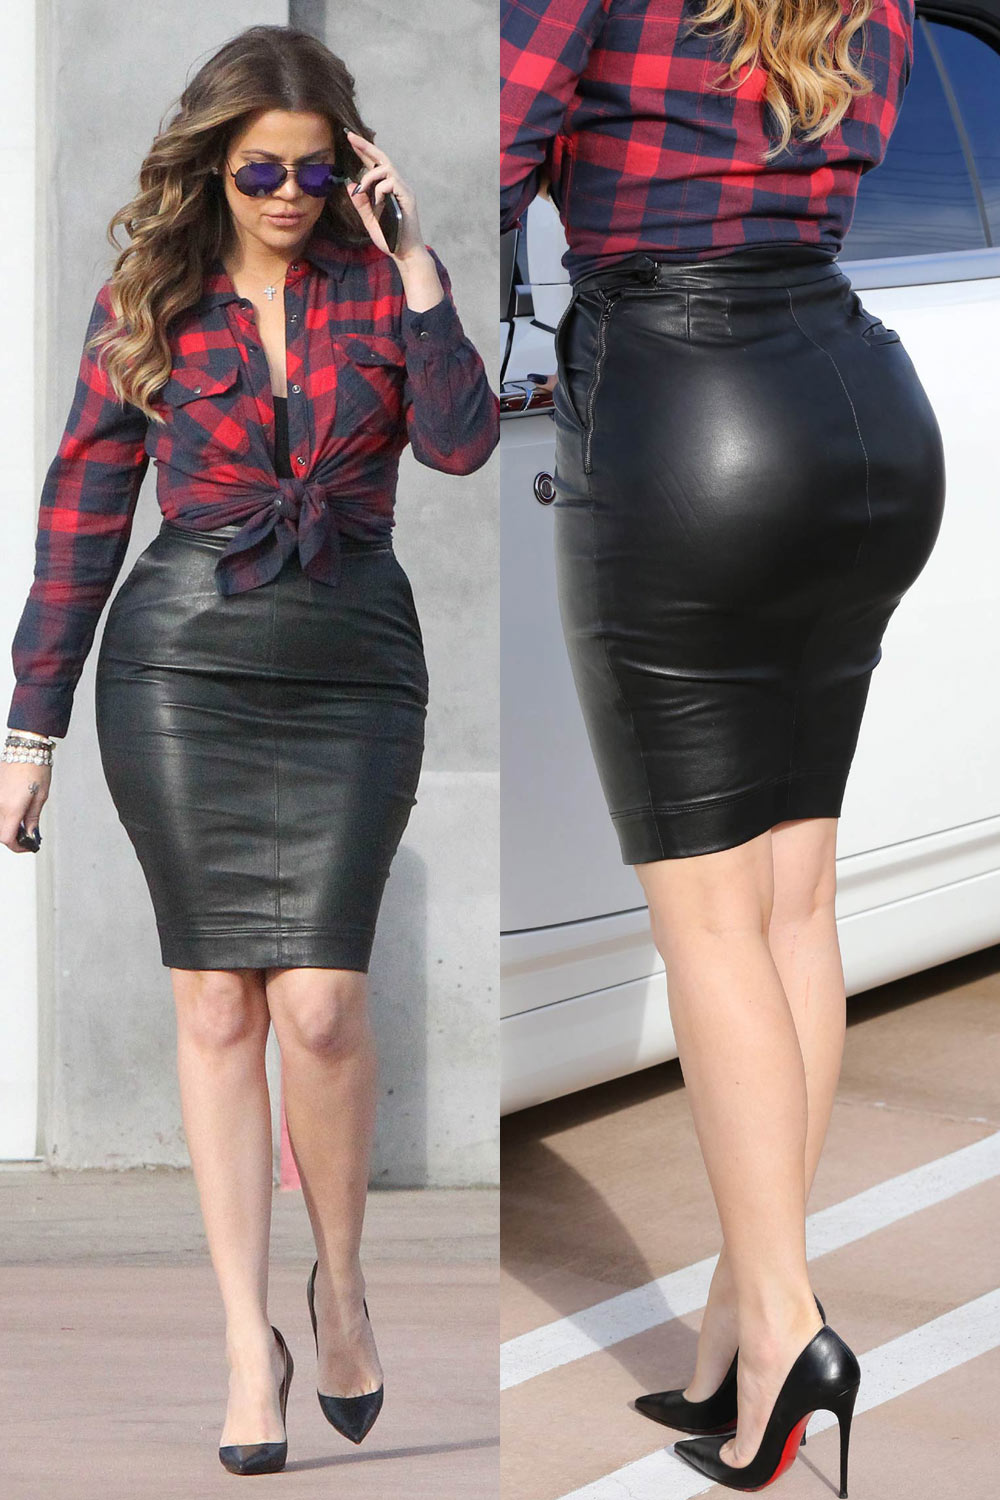 Khloe Kardashian Rocks A Tight Black Leather Skirt Whil